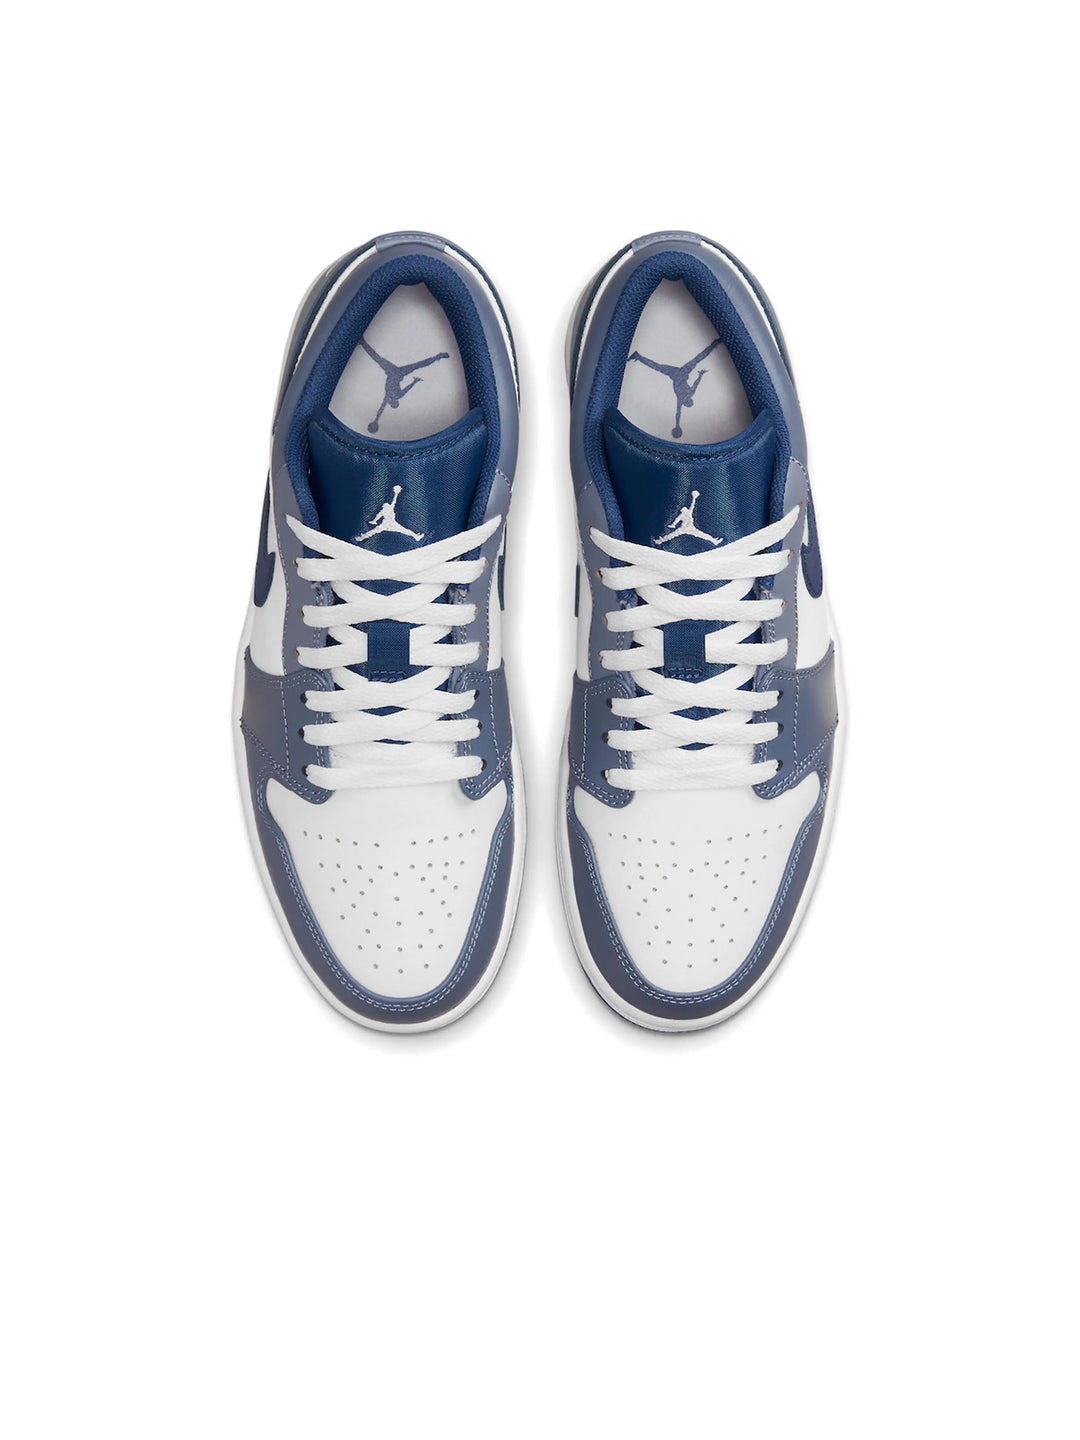 Nike Air Jordan 1 Low Slate Blue Navy (GS) Jordan Brand